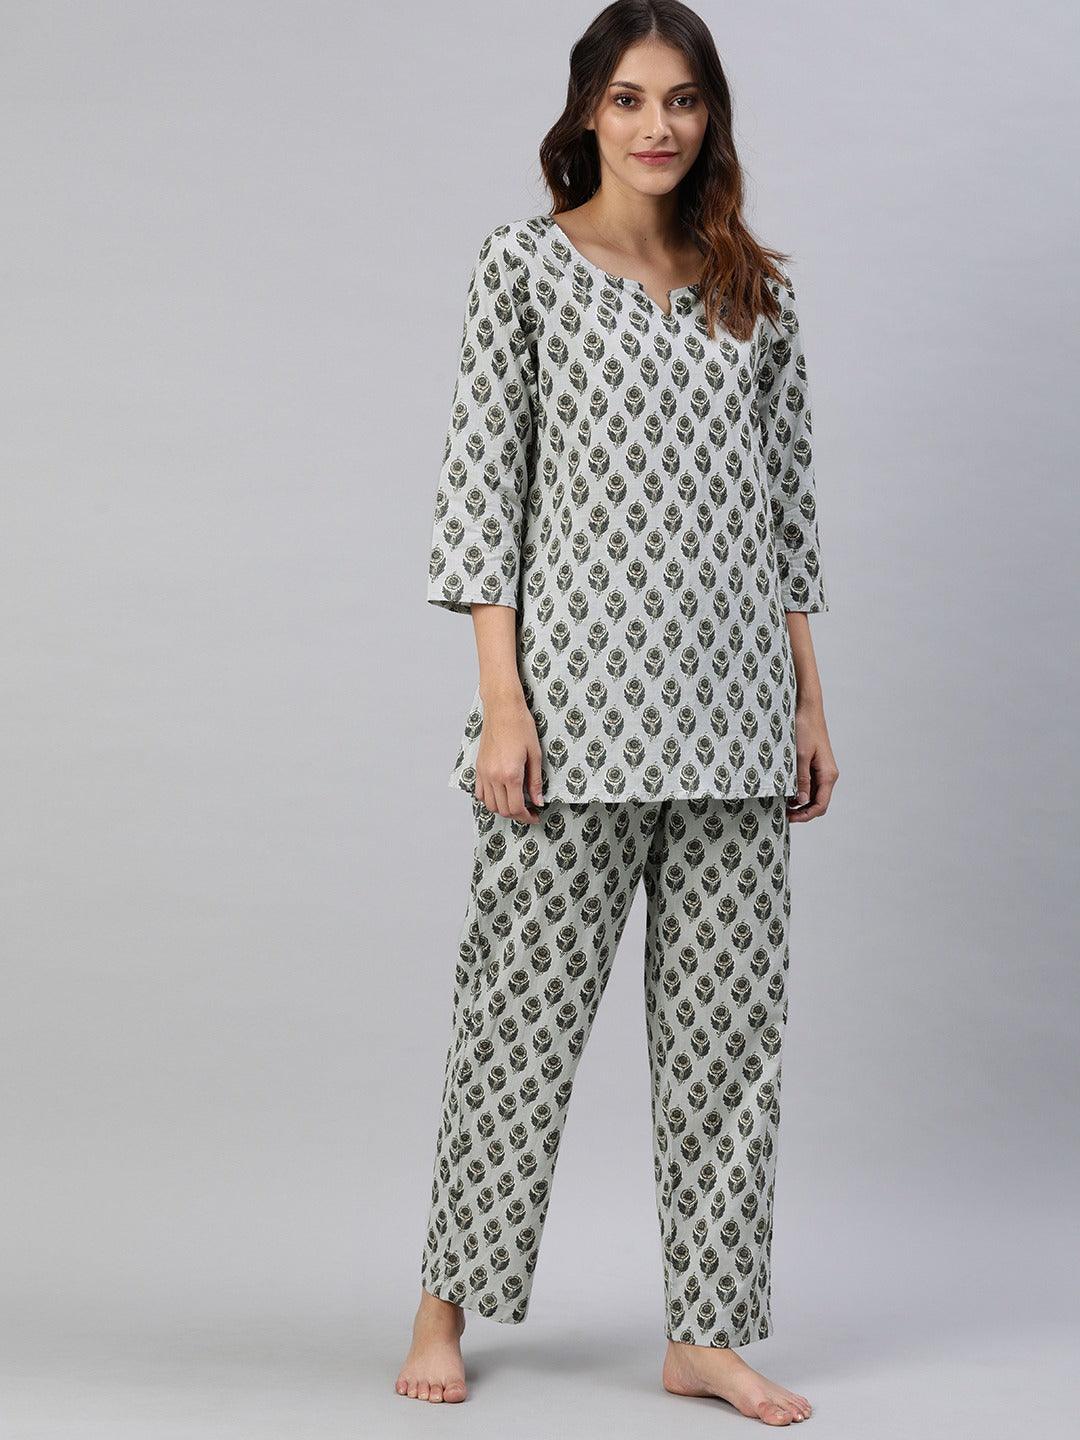 Divena Grey Color Cotton Loungewear/Nightwear - divena world